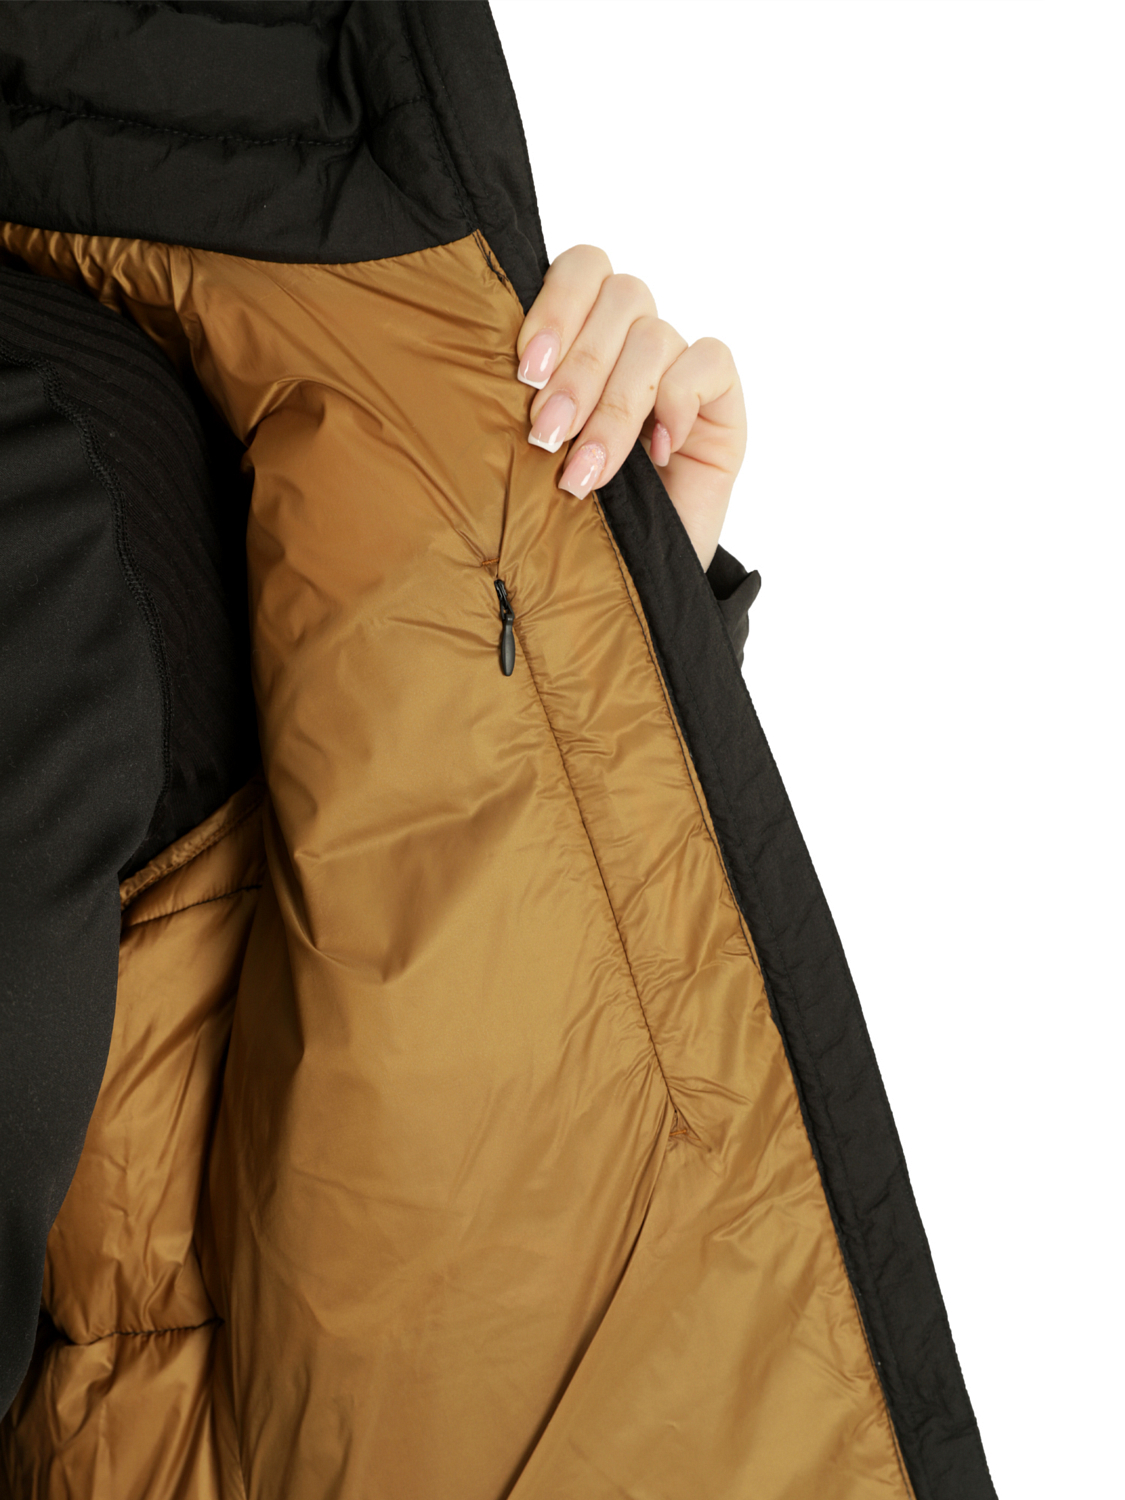 Куртка для активного отдыха Dolomite Jacket W's 76 Fitzroy Black